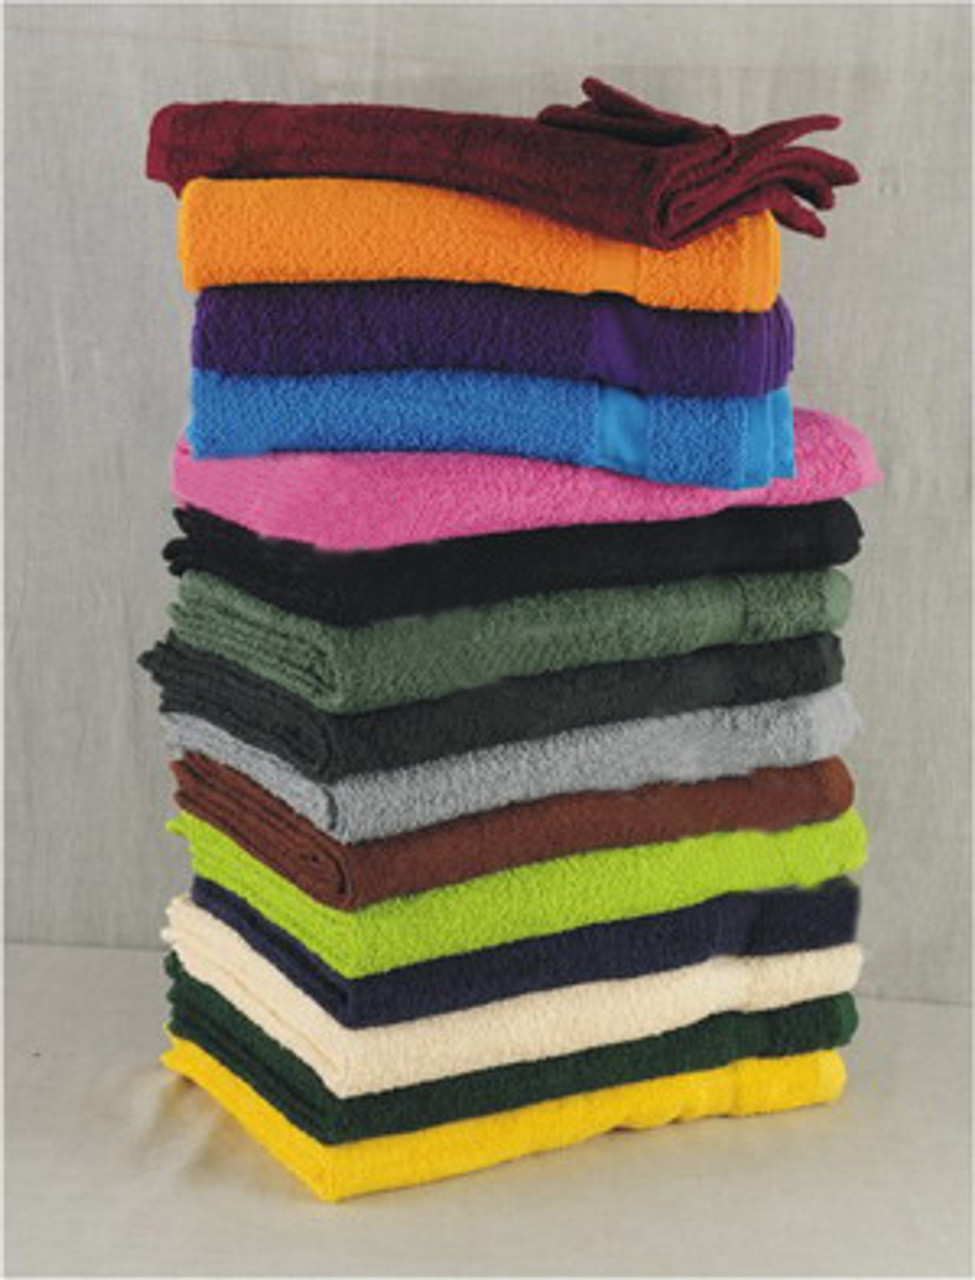 Just Salon Towels USA  Bleach Proof, Bleach Resistant Salon Towels